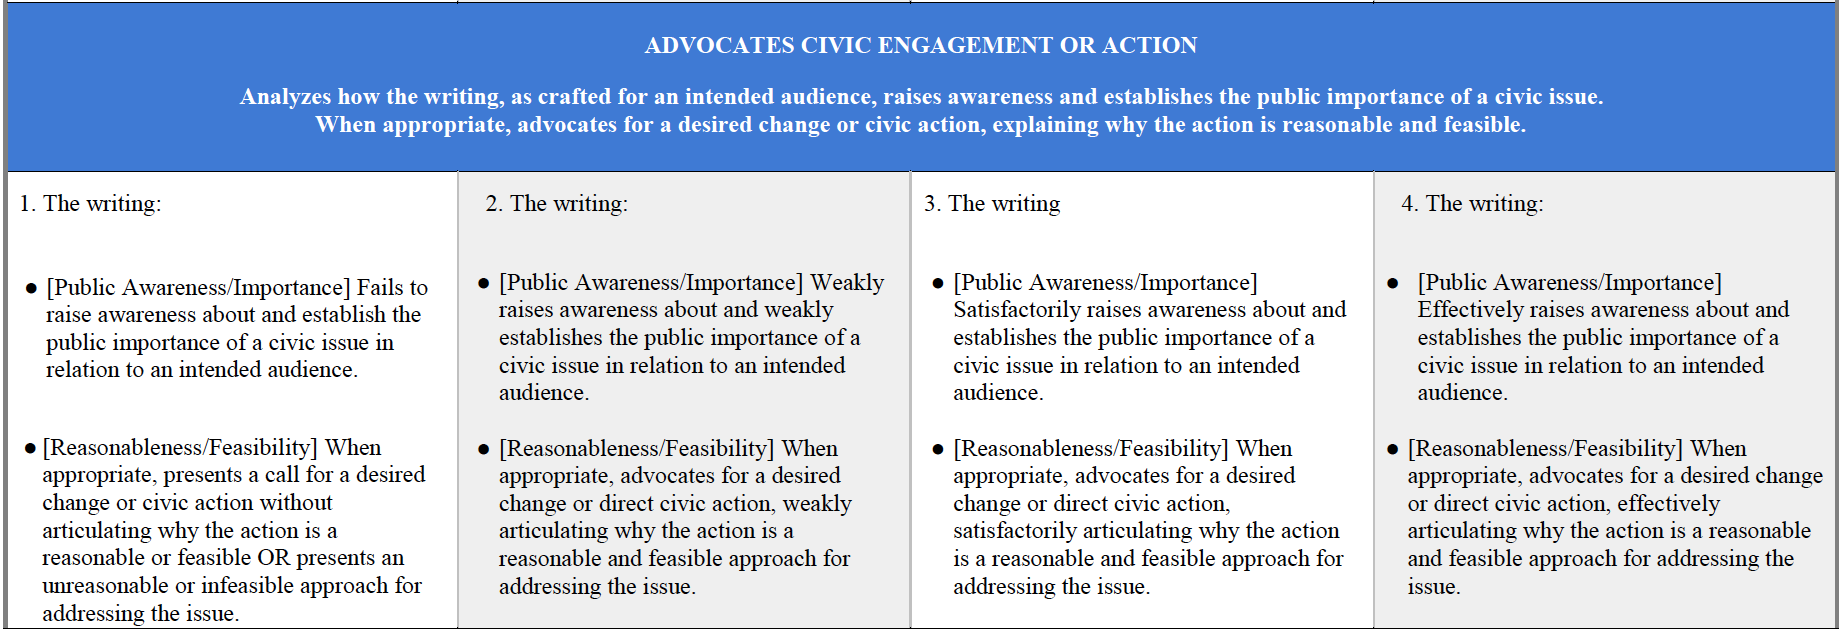 Advocates Civic Action Snapshot